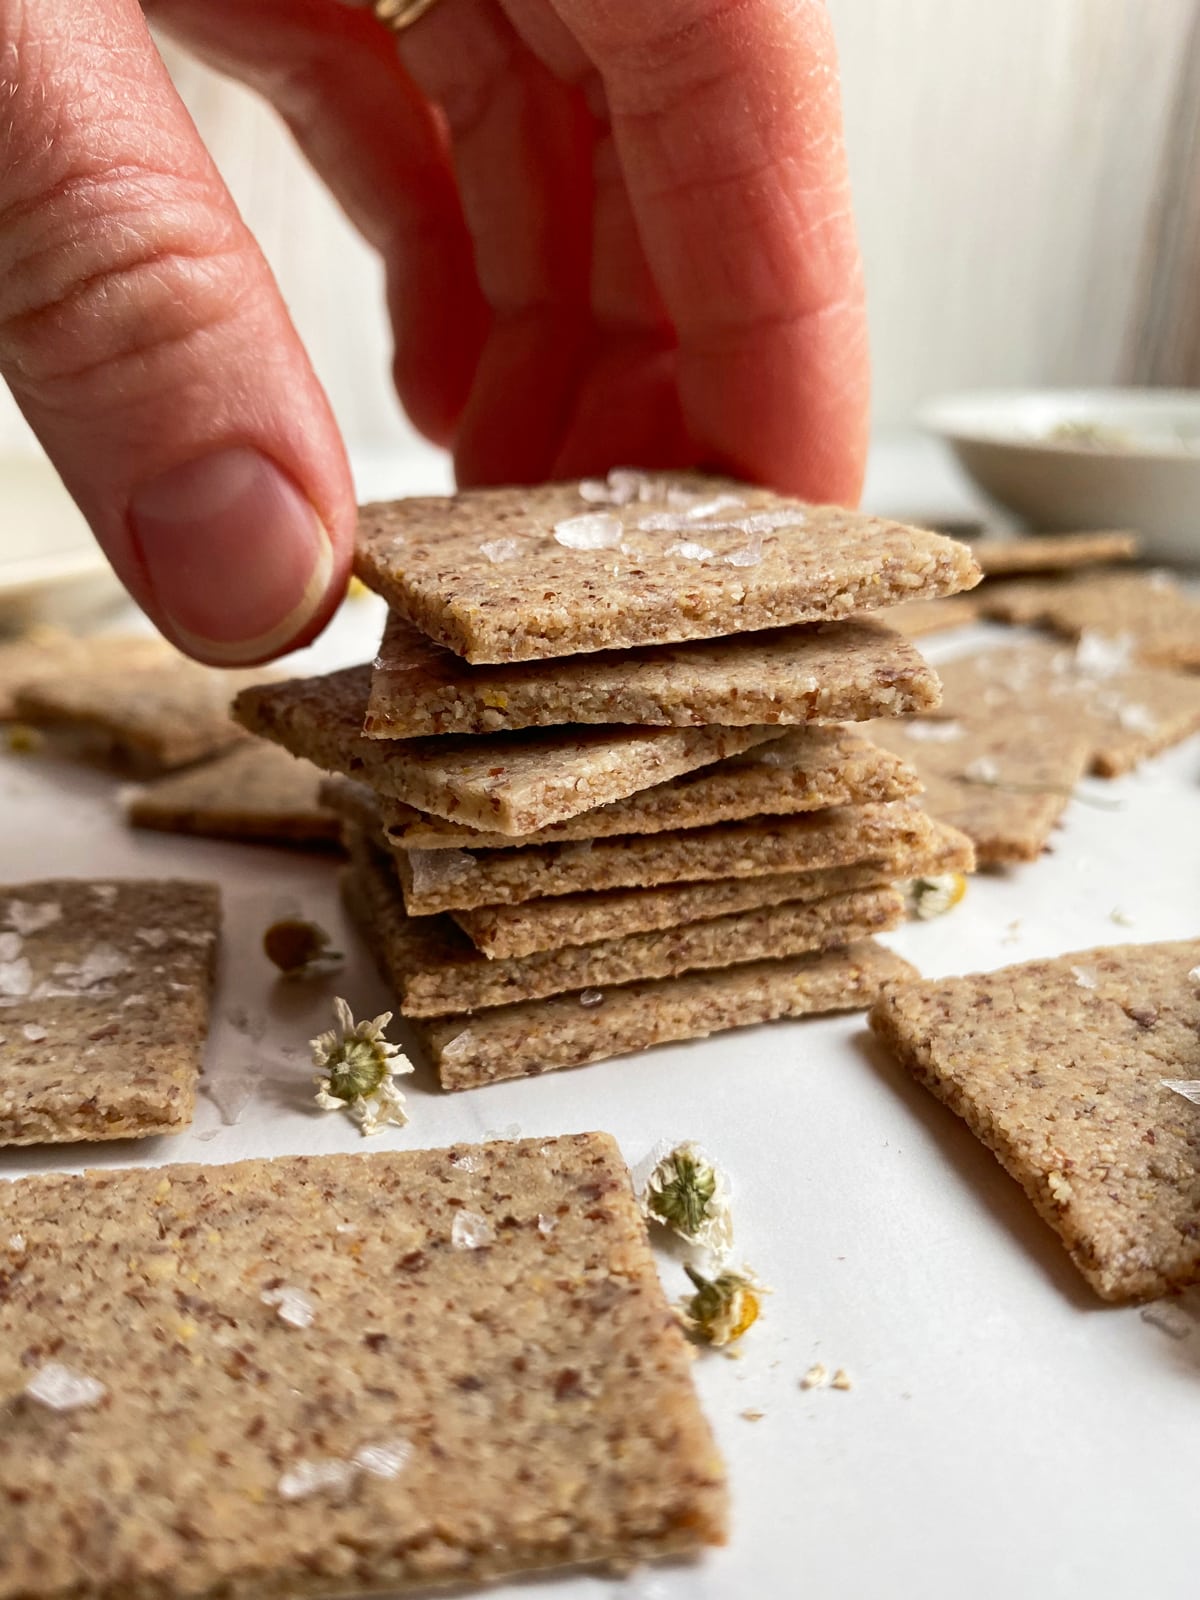 almond flour crackers